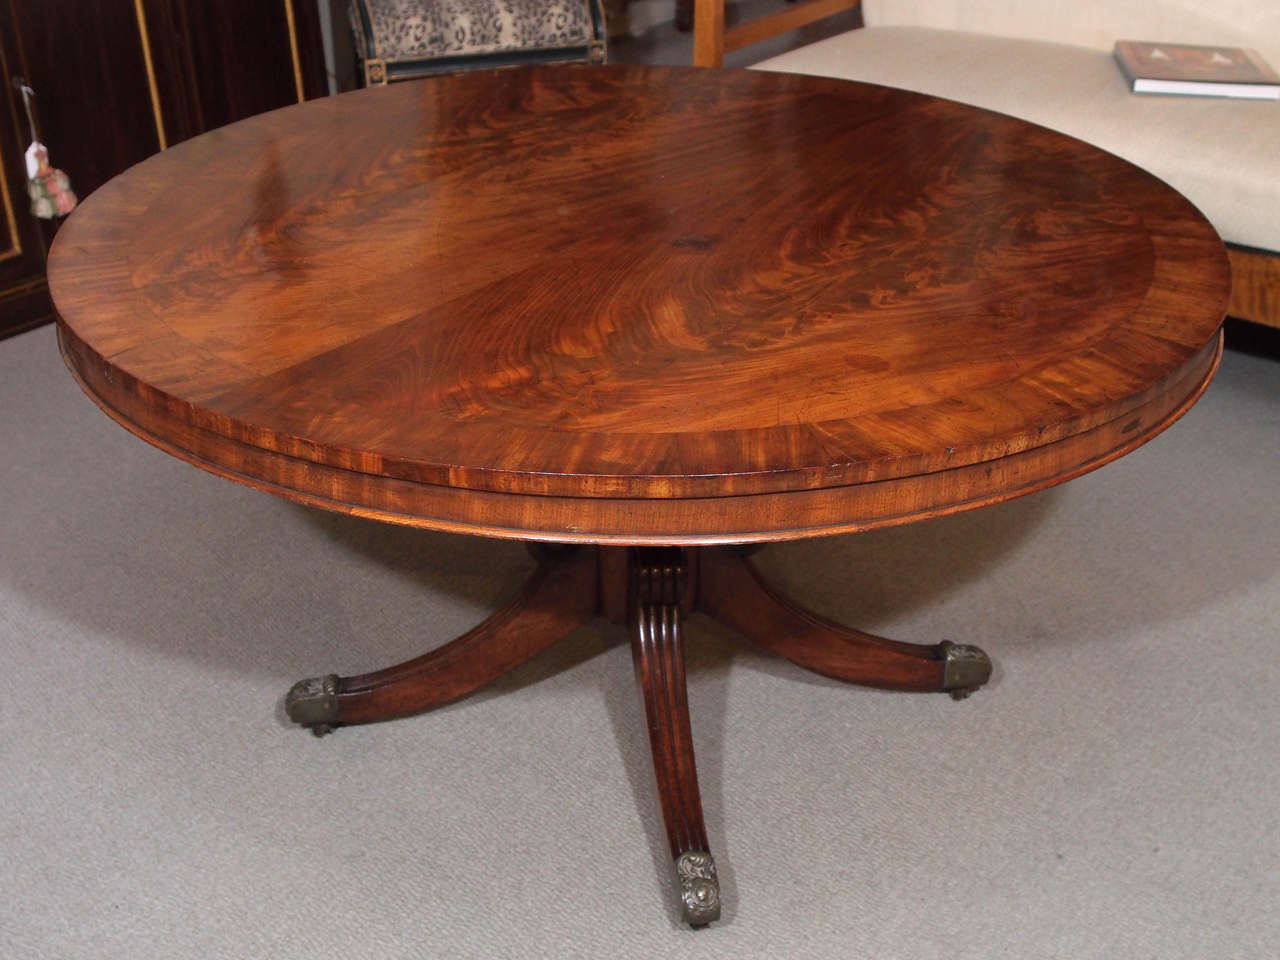 Antique English Regency round mahogany cross banded center table, circa 1810-1820.